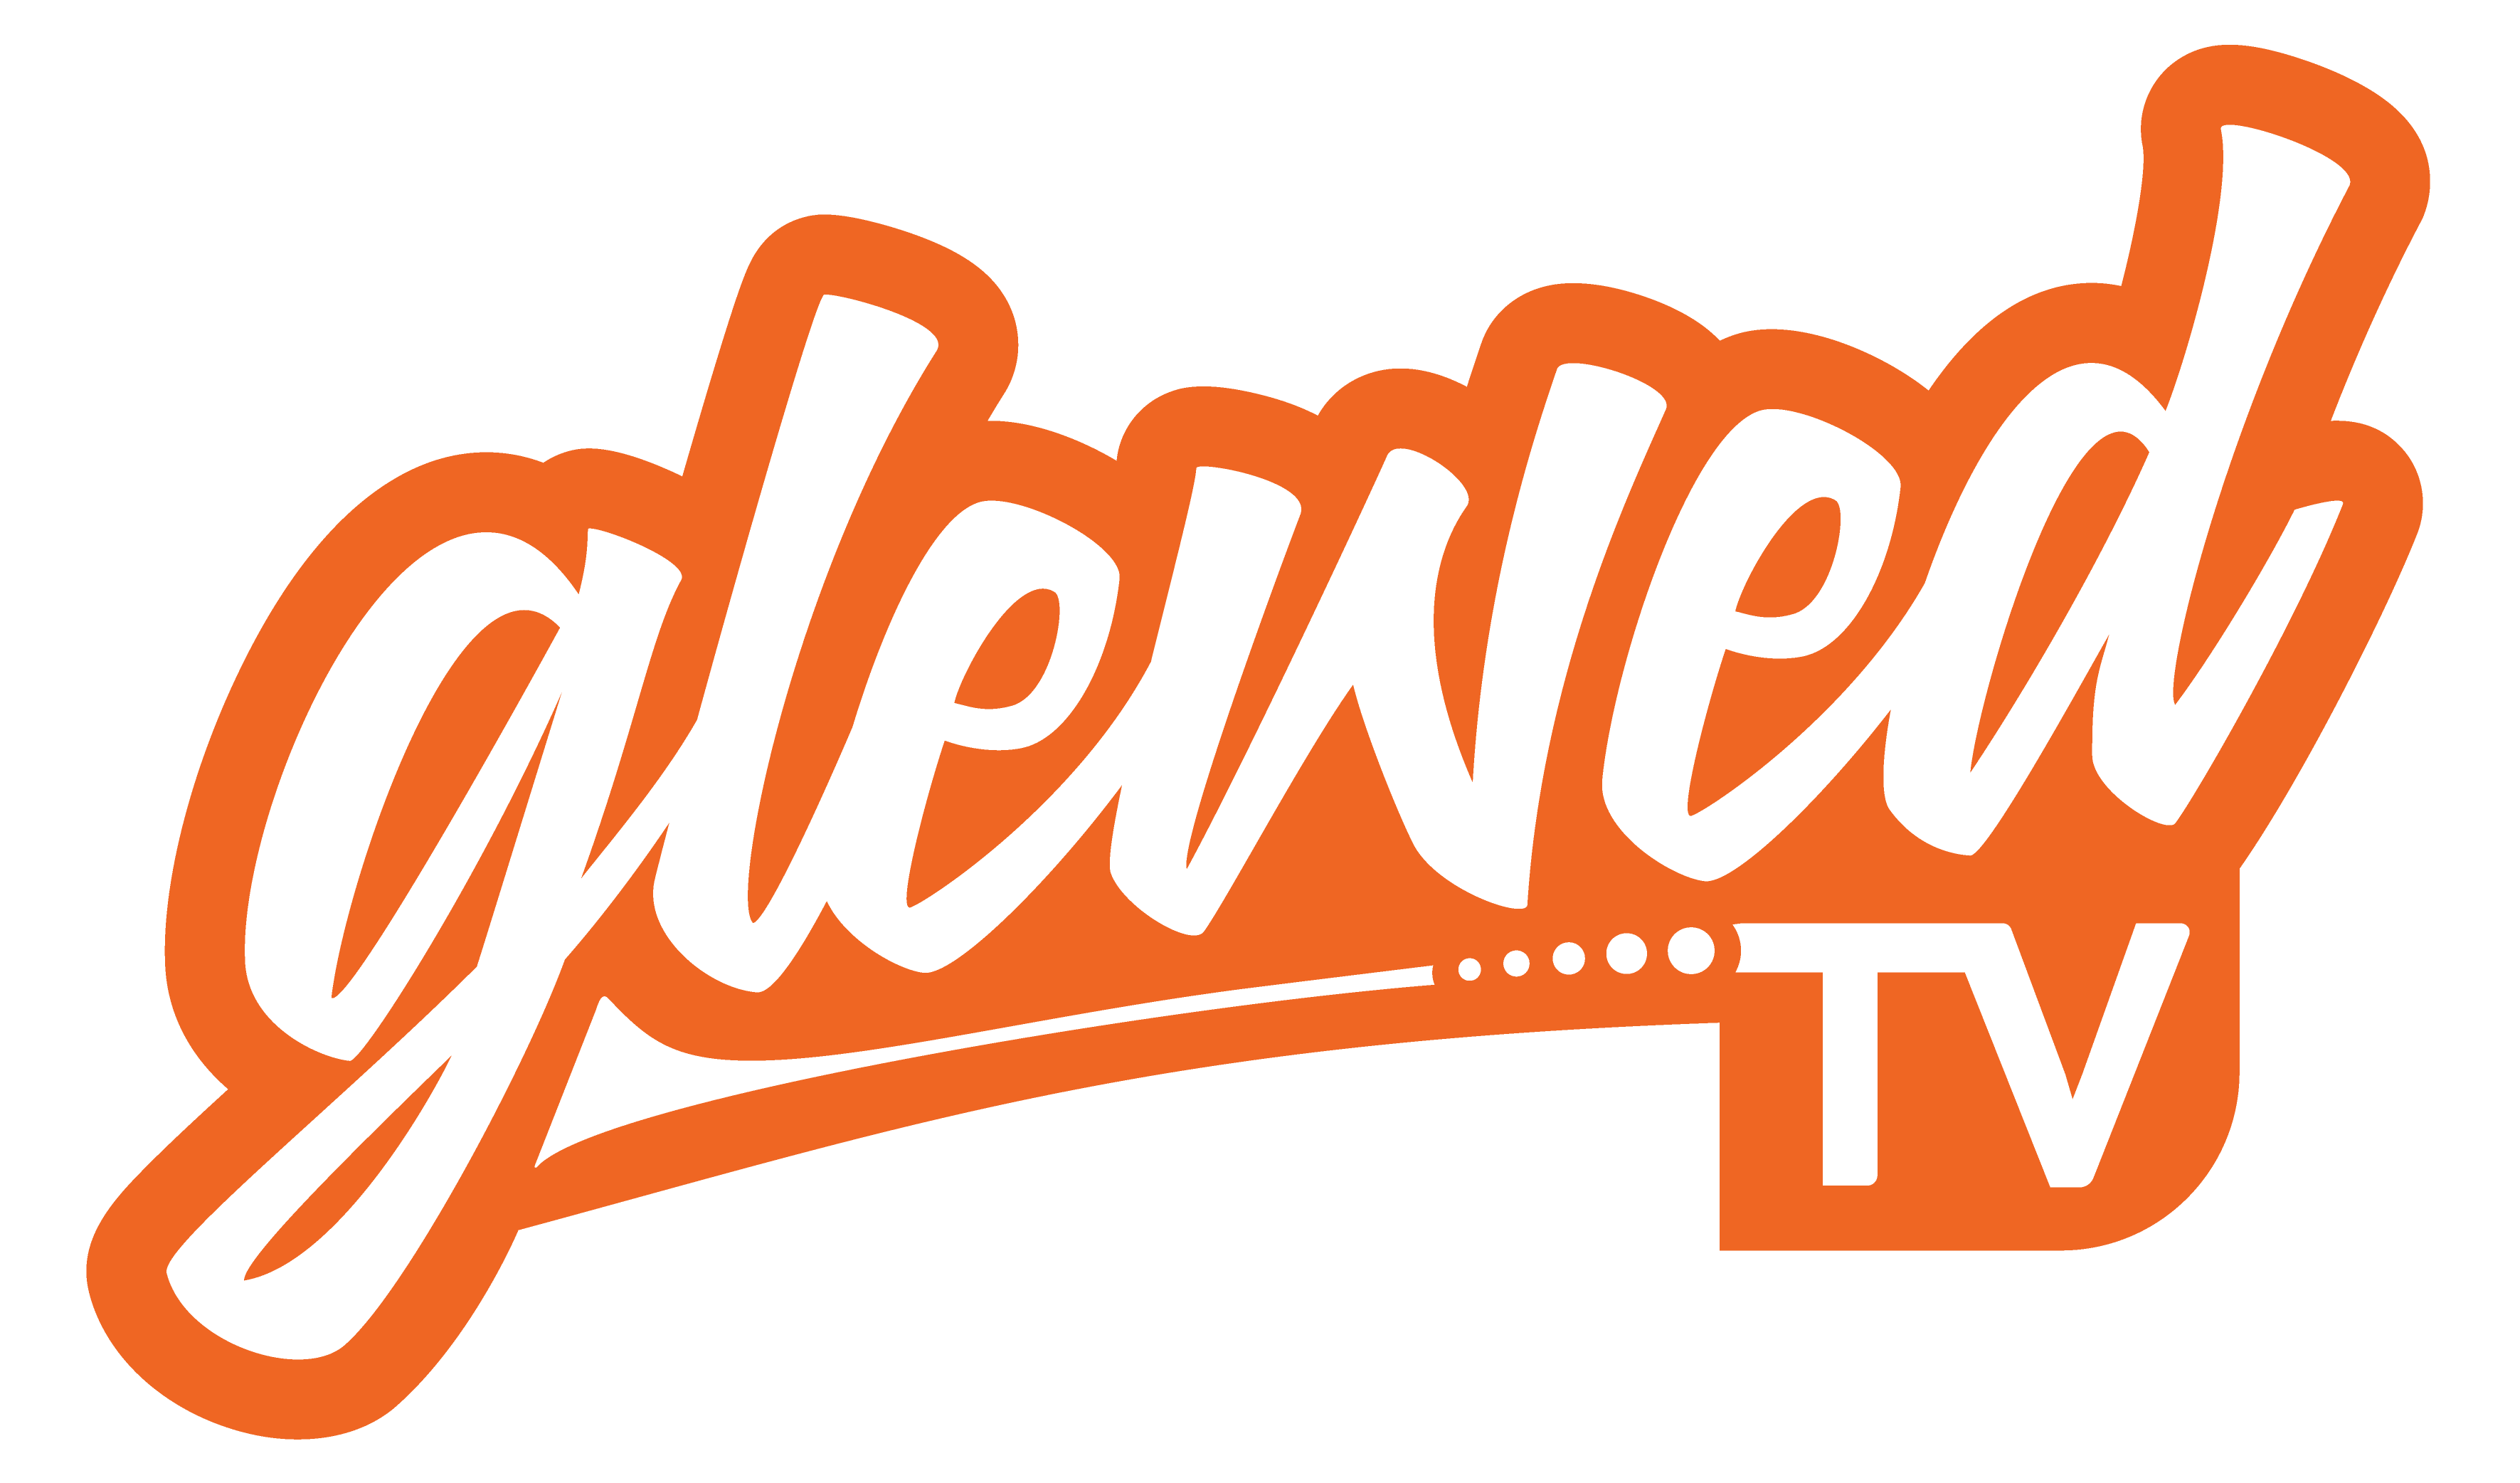 GlewedTV